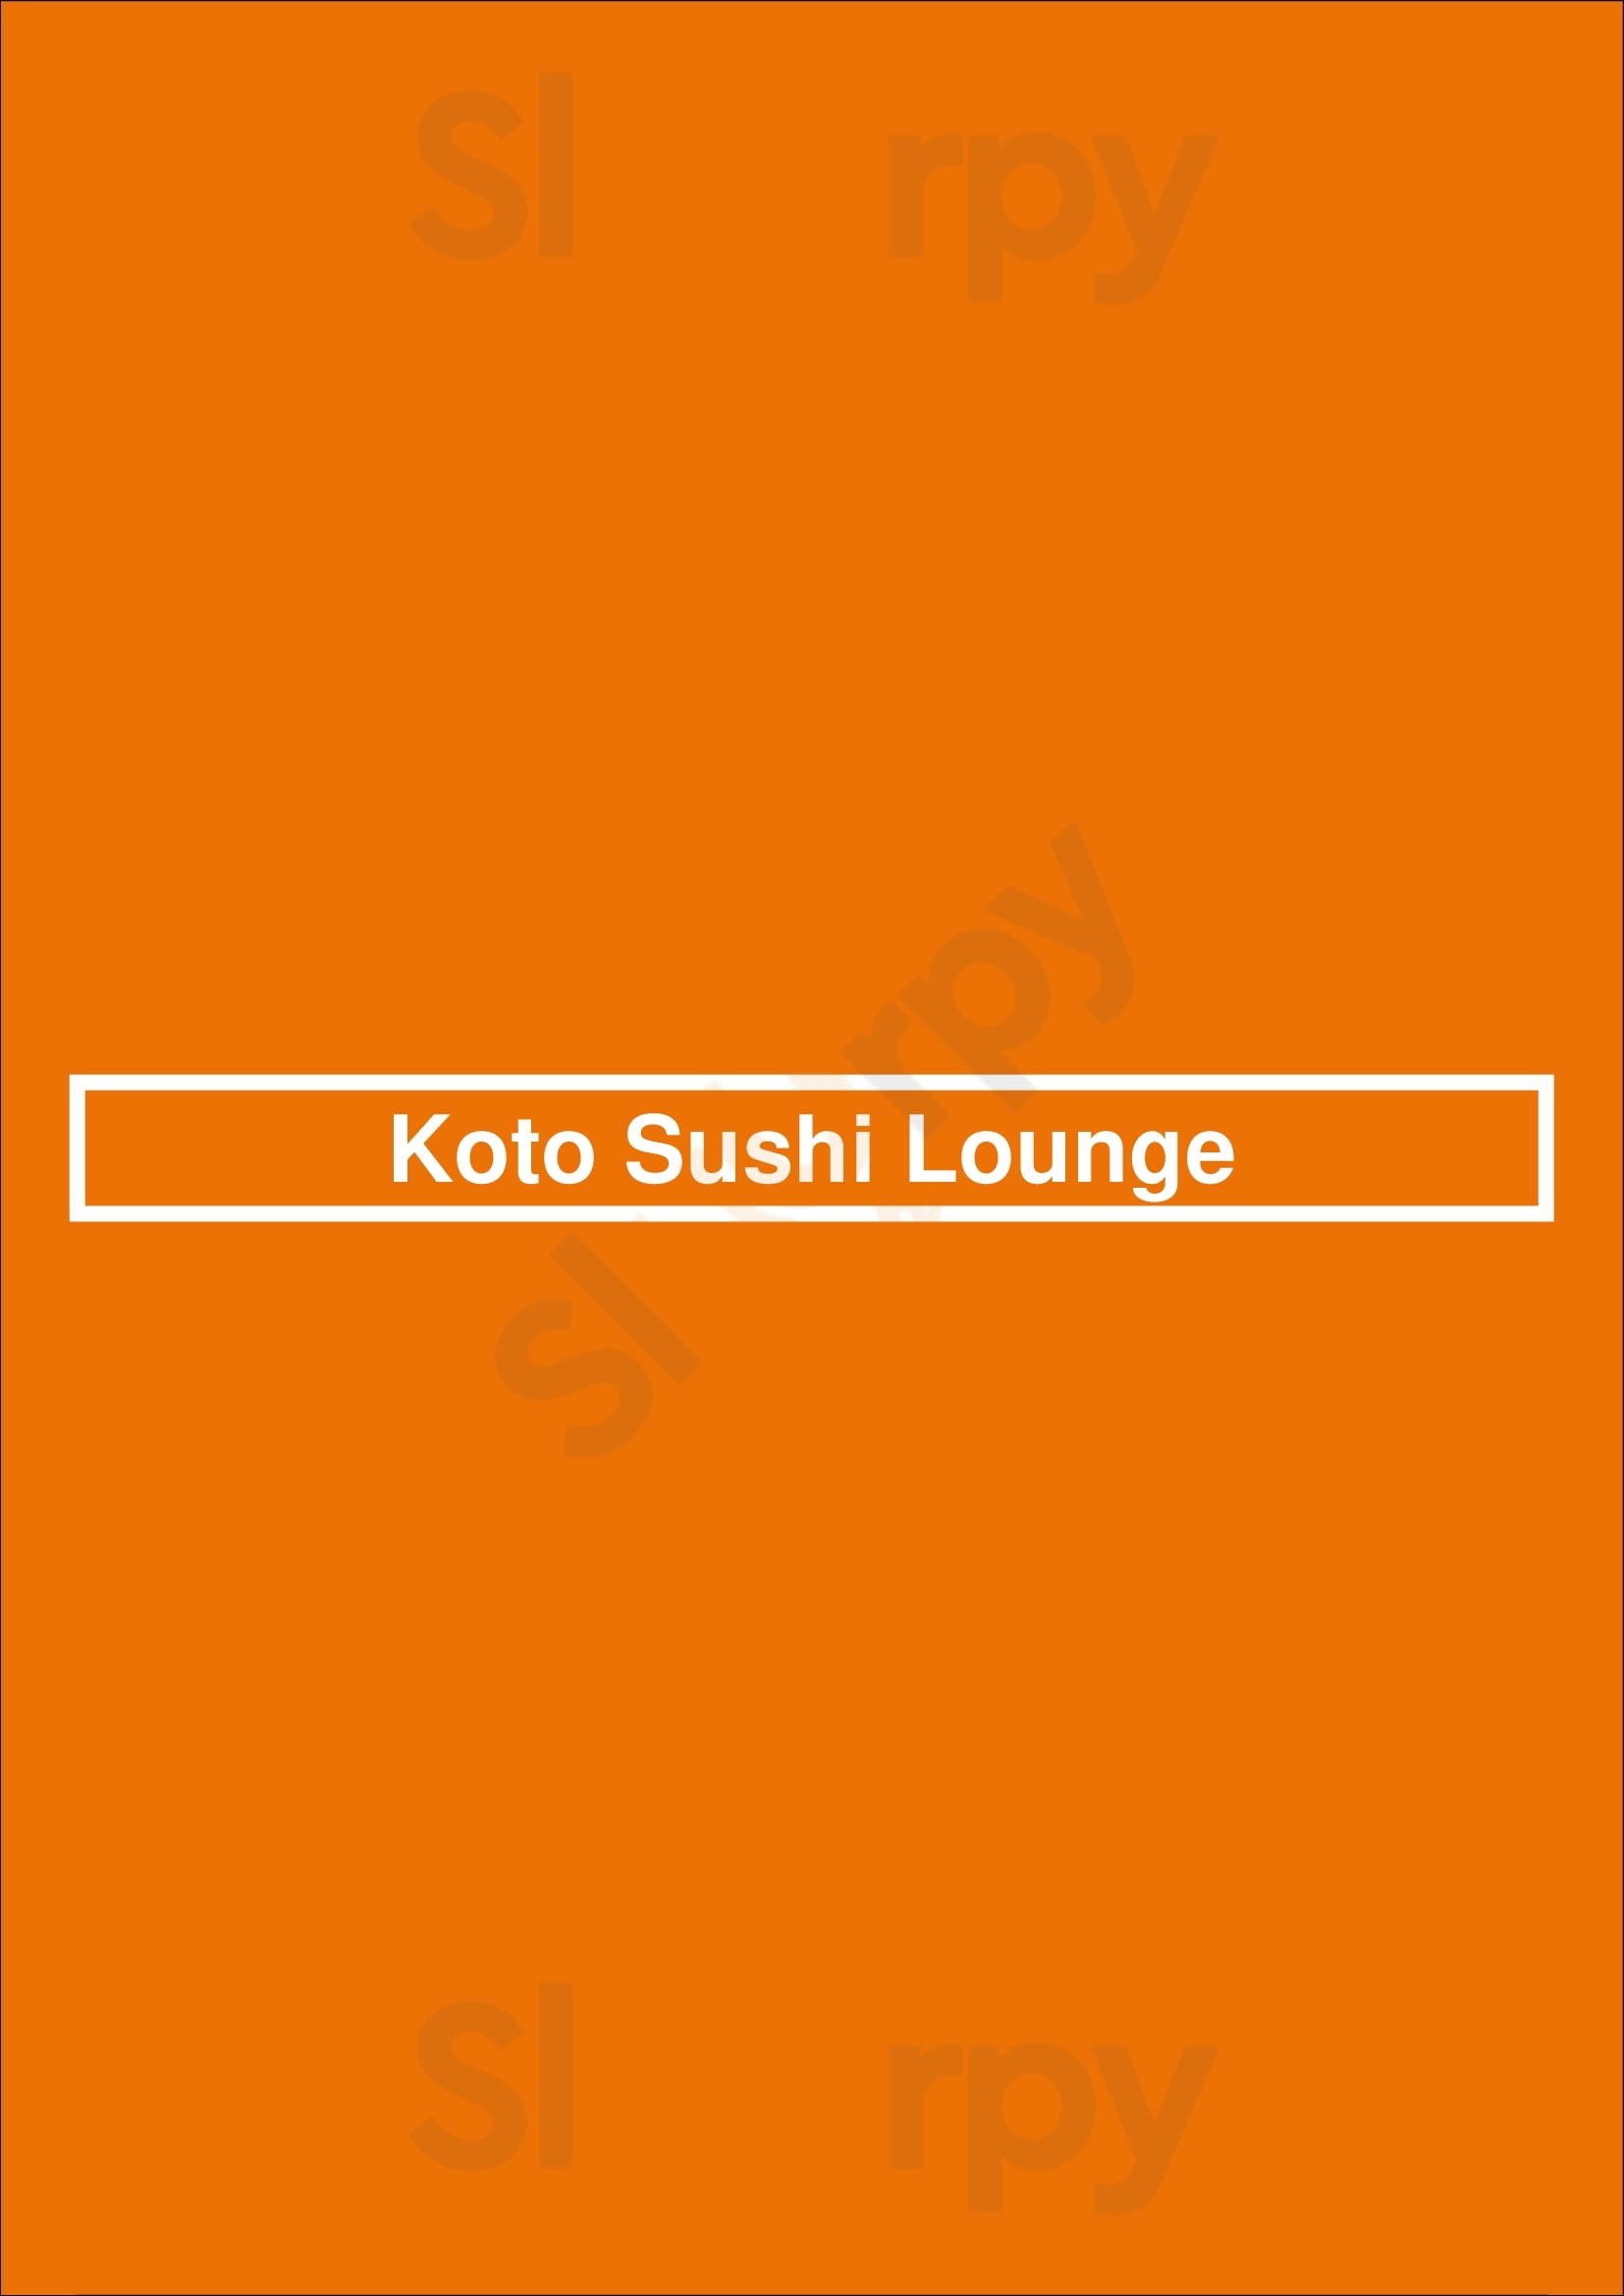 Koto Sushi Lounge Calgary Menu - 1